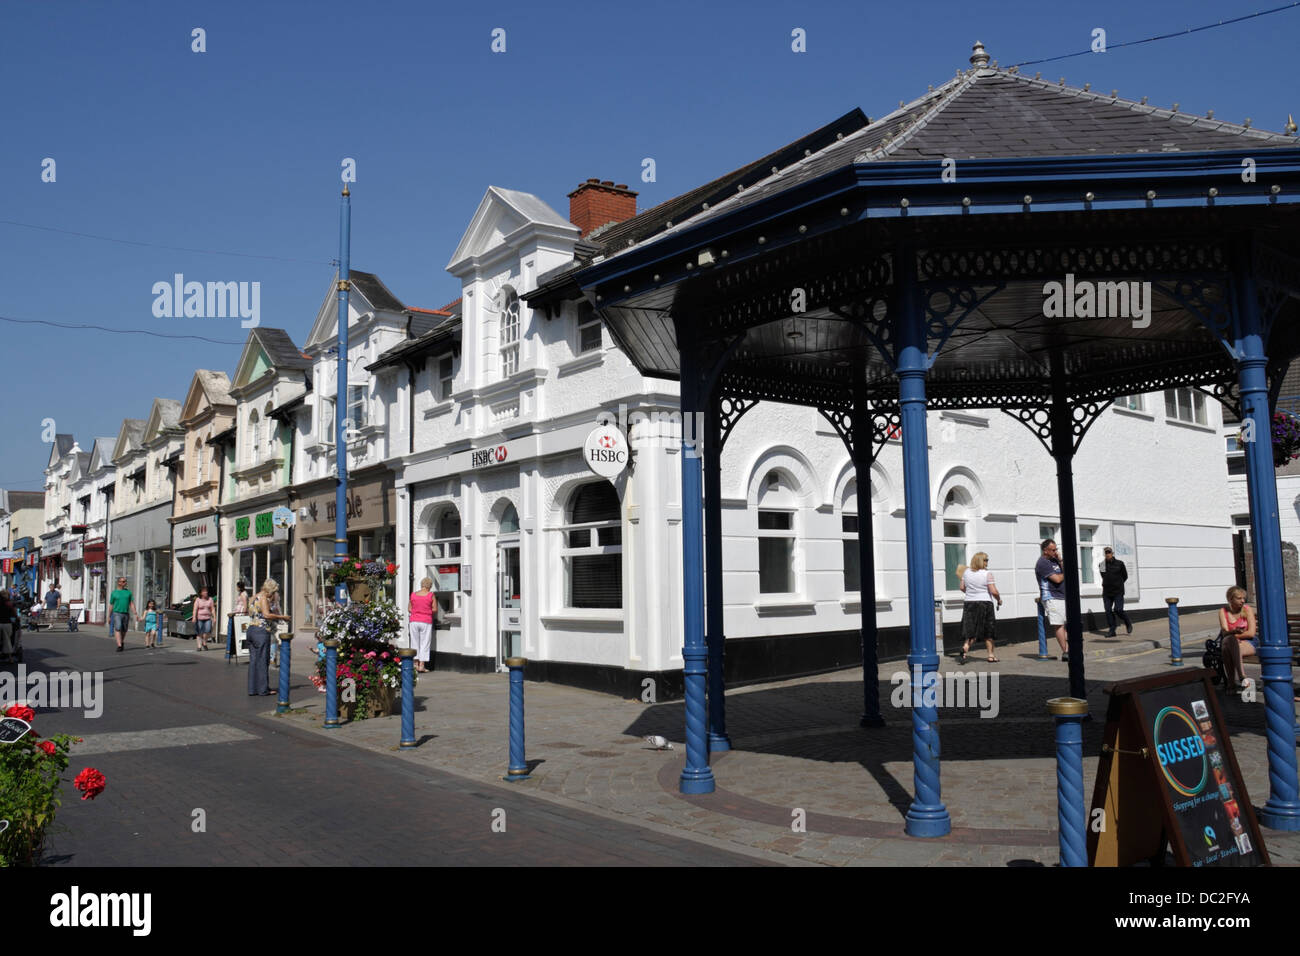 Pedestrian Shopping street in Porthcawl Wales Stock Photo